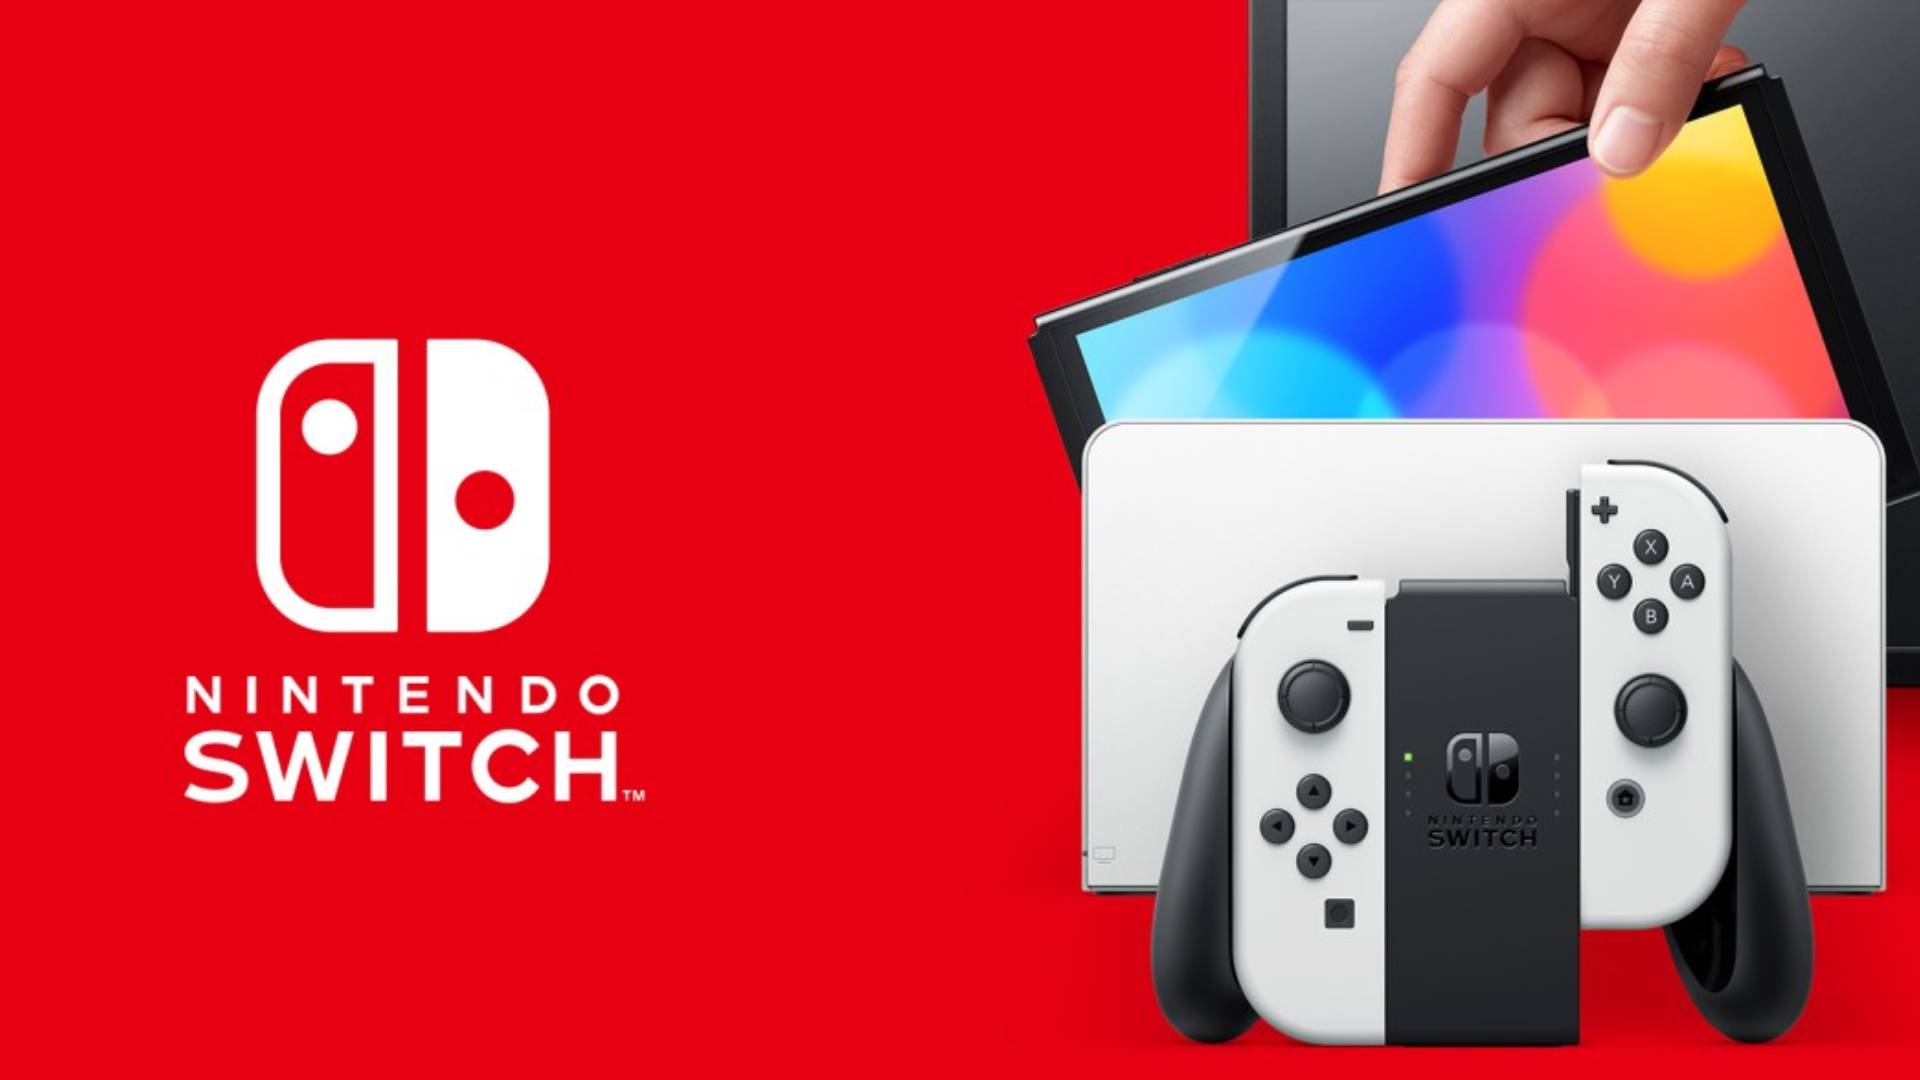 Nintendo Switch Update 17.0.0 Released for October 10